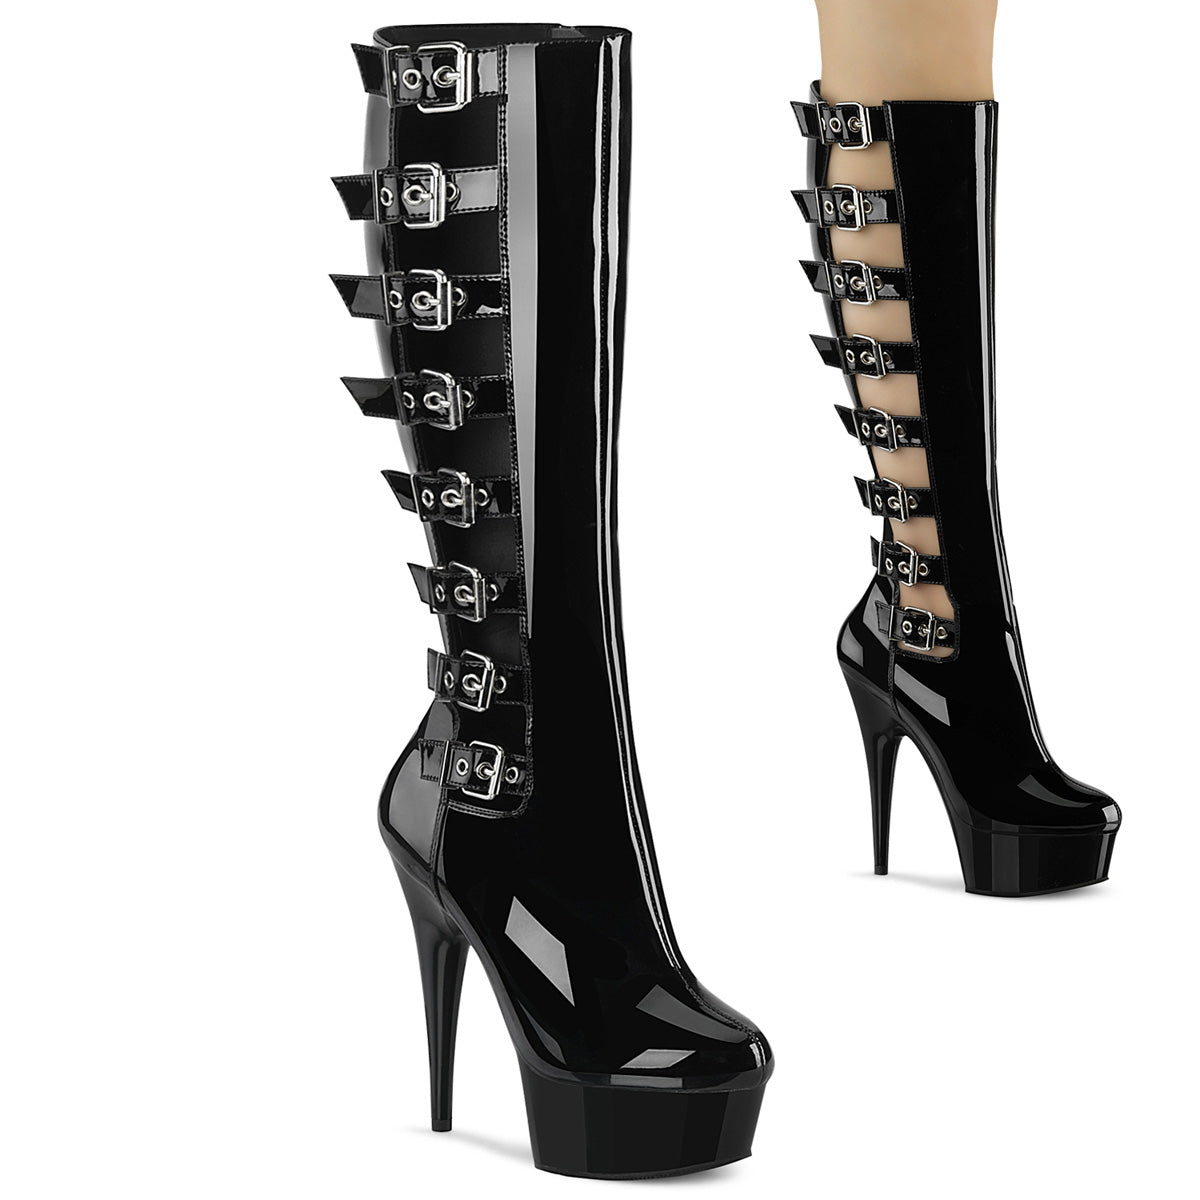 DELIGHT-2047 6 Inch Heel Black Patent  Stripper Platforms High Heels